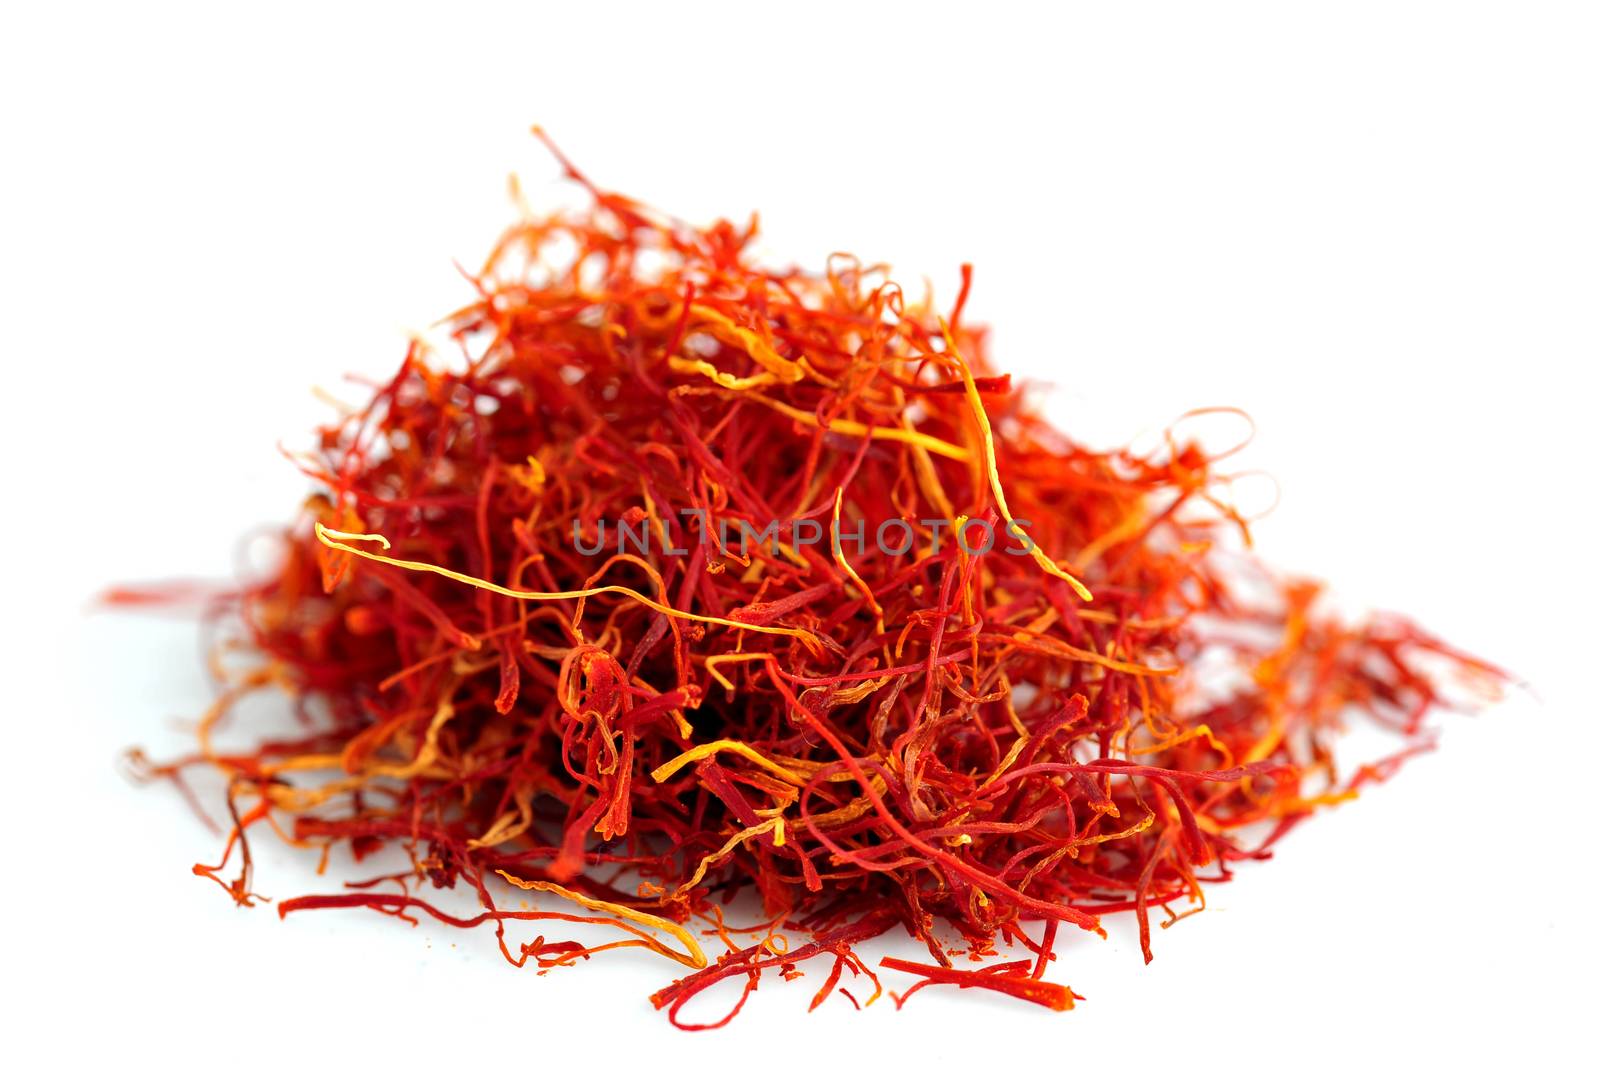 Saffron Spice by seawaters